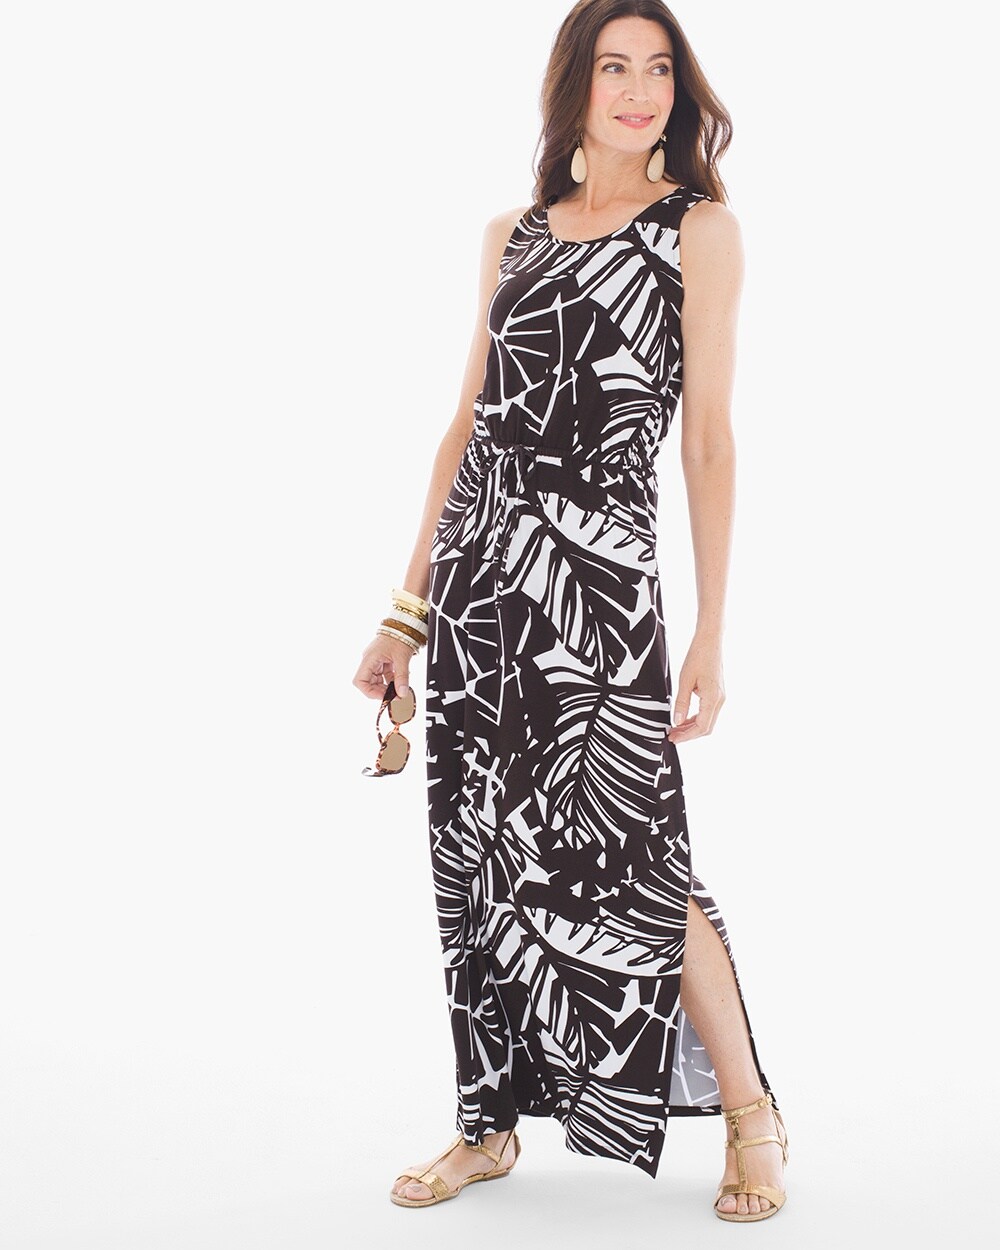 Zenergy Noelle Palm Print Maxi Dress